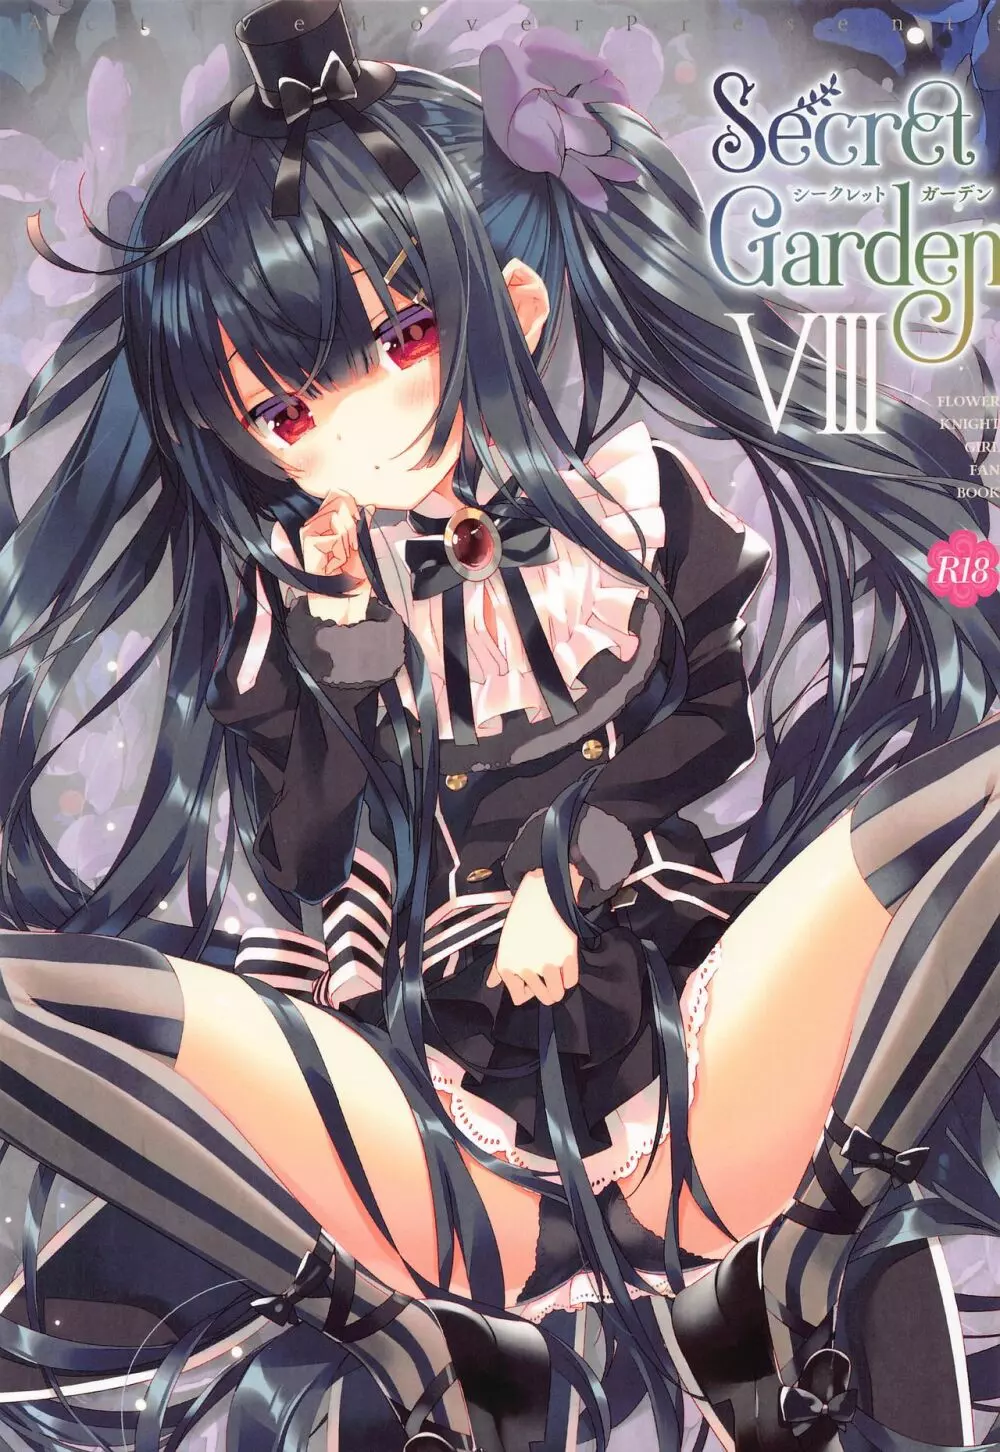 Secret Garden VIII